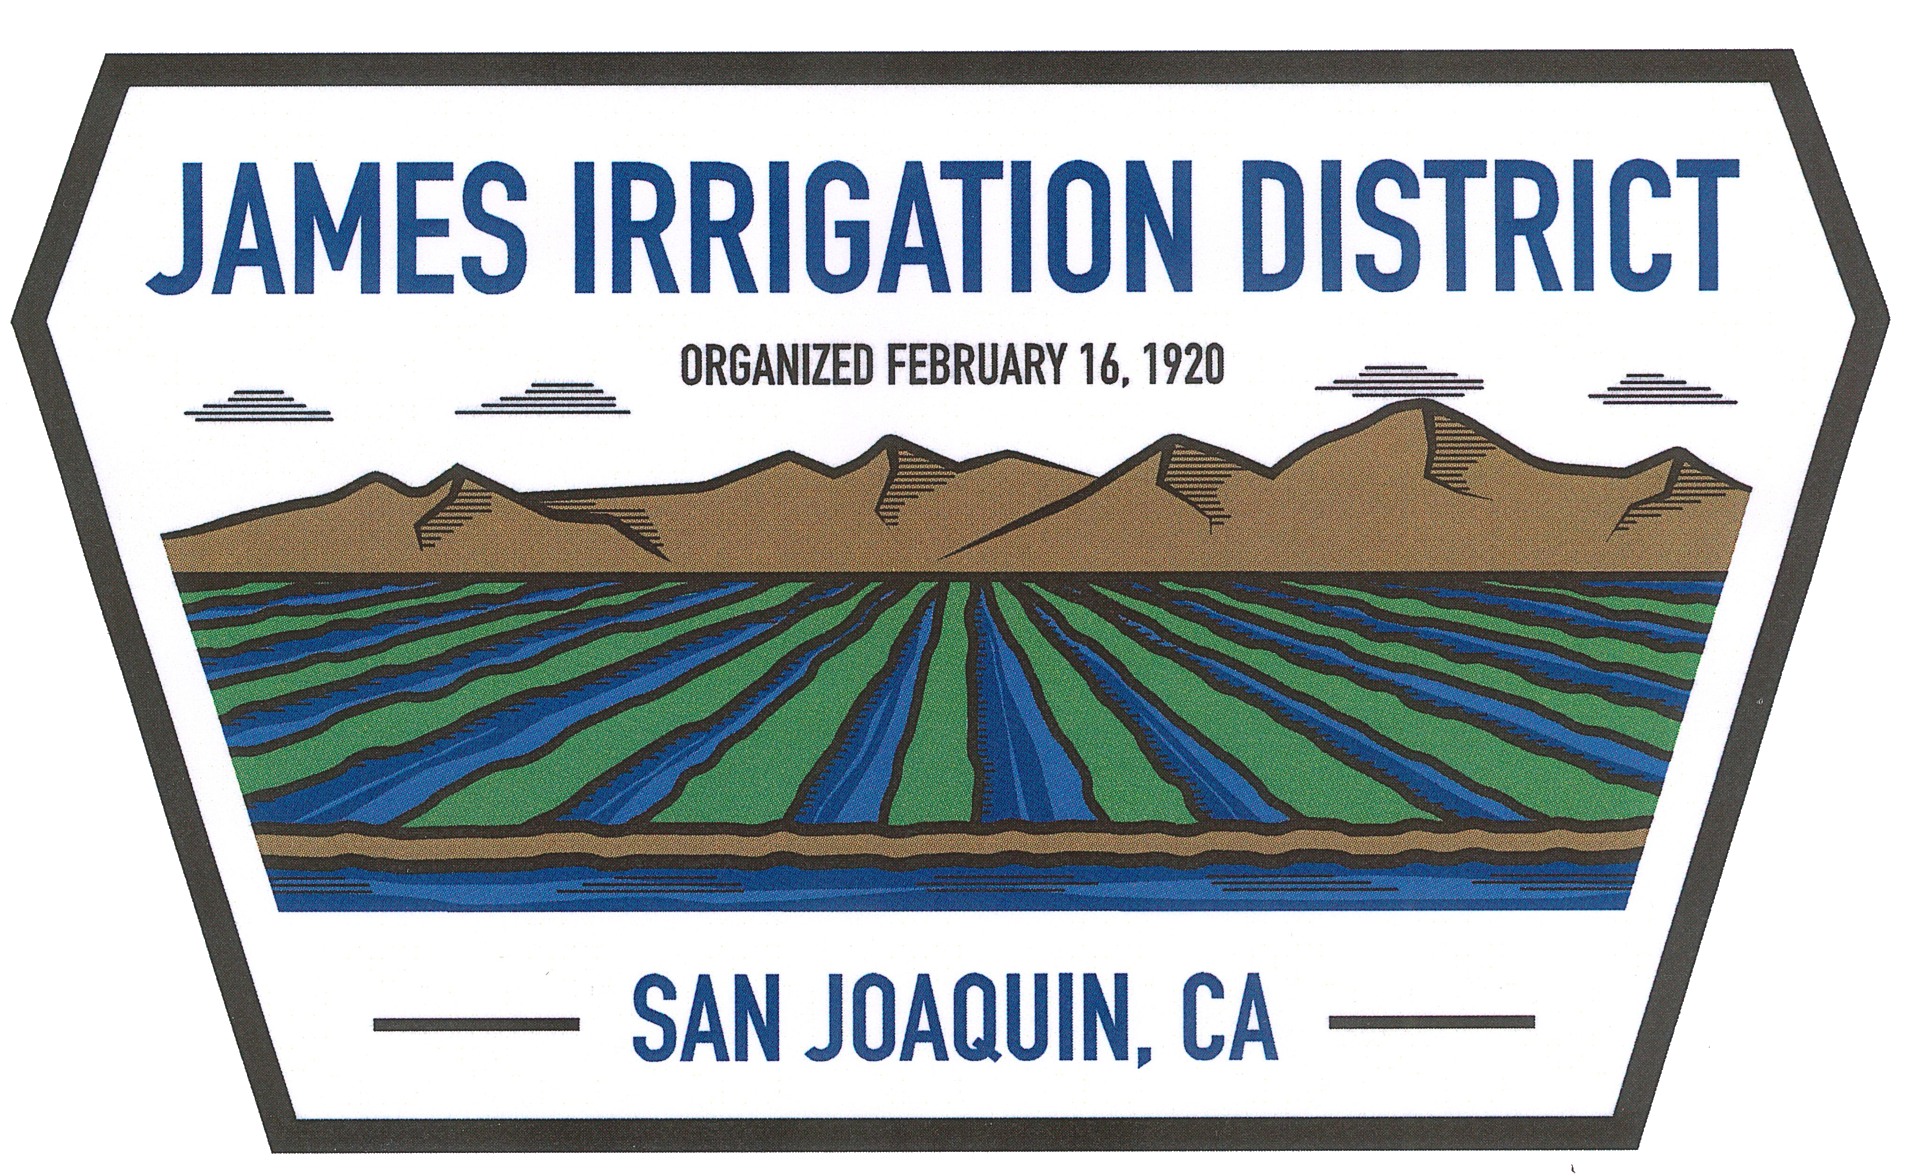 James Irrigation District